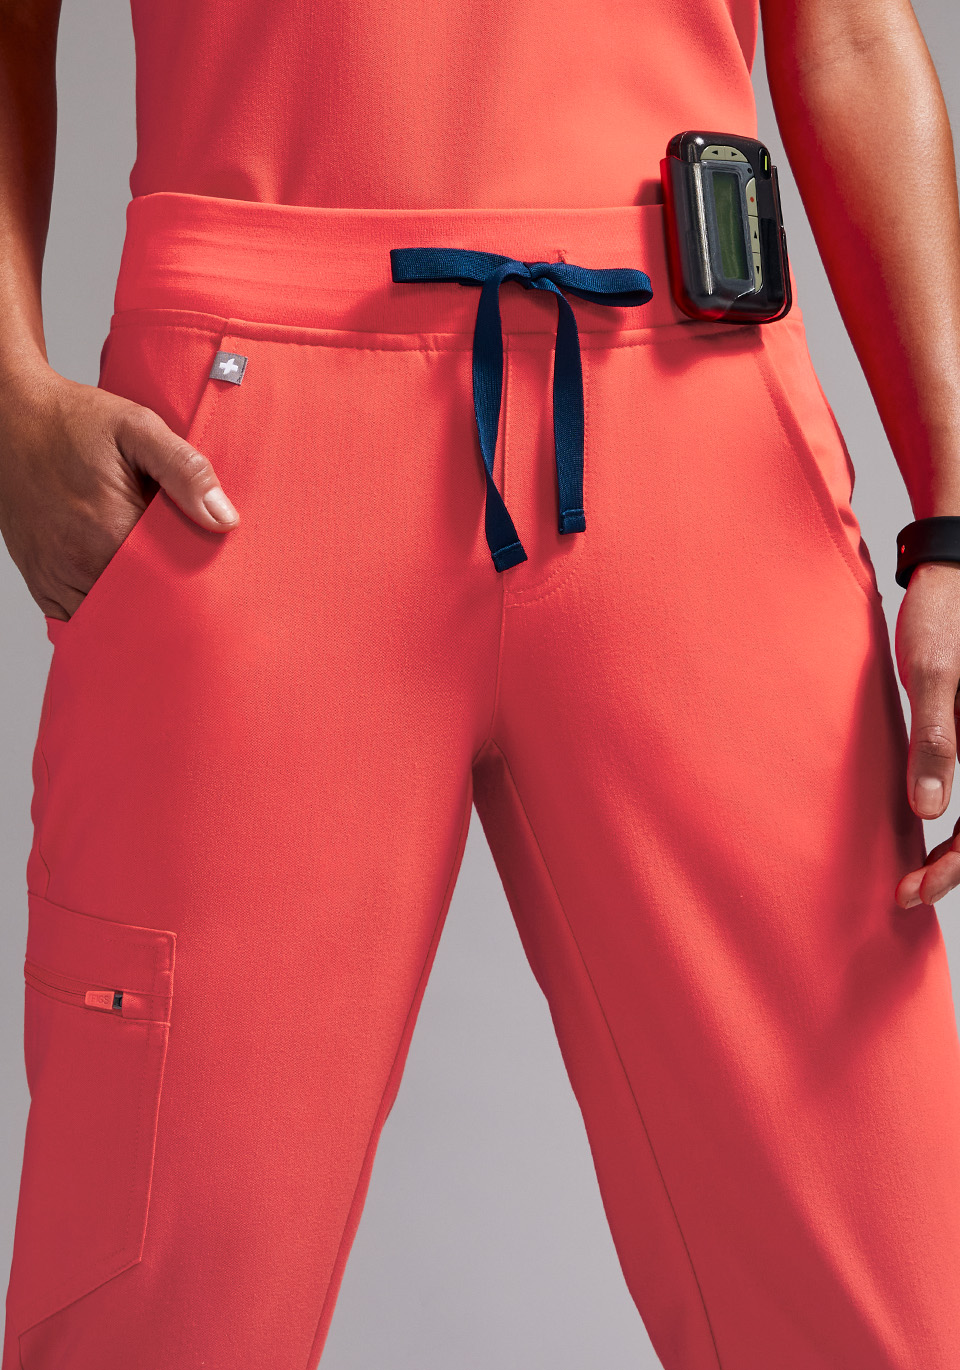 FIGS Zamora Jogger Style Scrub Pants for Women - Ceil Blue, M, Blue, M  price in UAE,  UAE